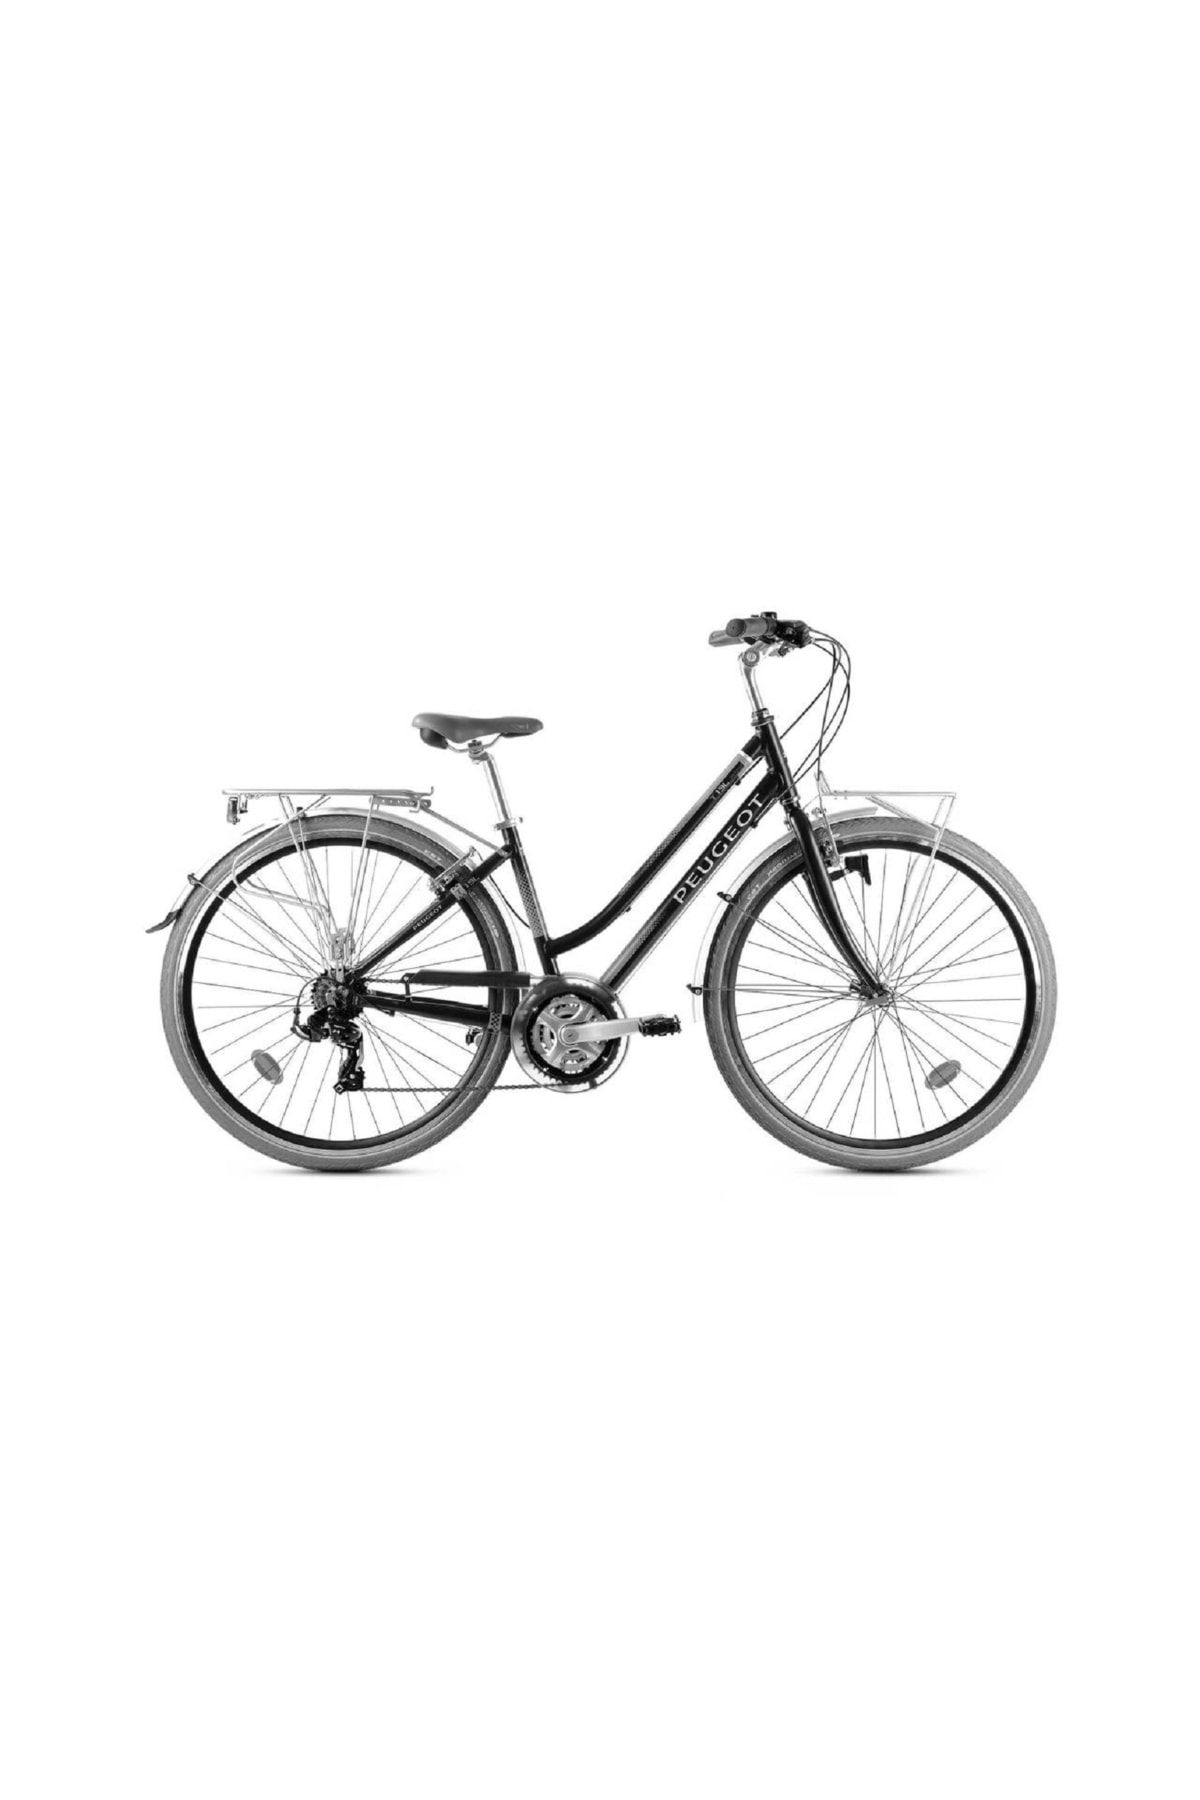 Peugeot Bisiklet T19-l 28 Jant 380h 21-v Vb Siyah-kahverengi Şehir Bisikleti